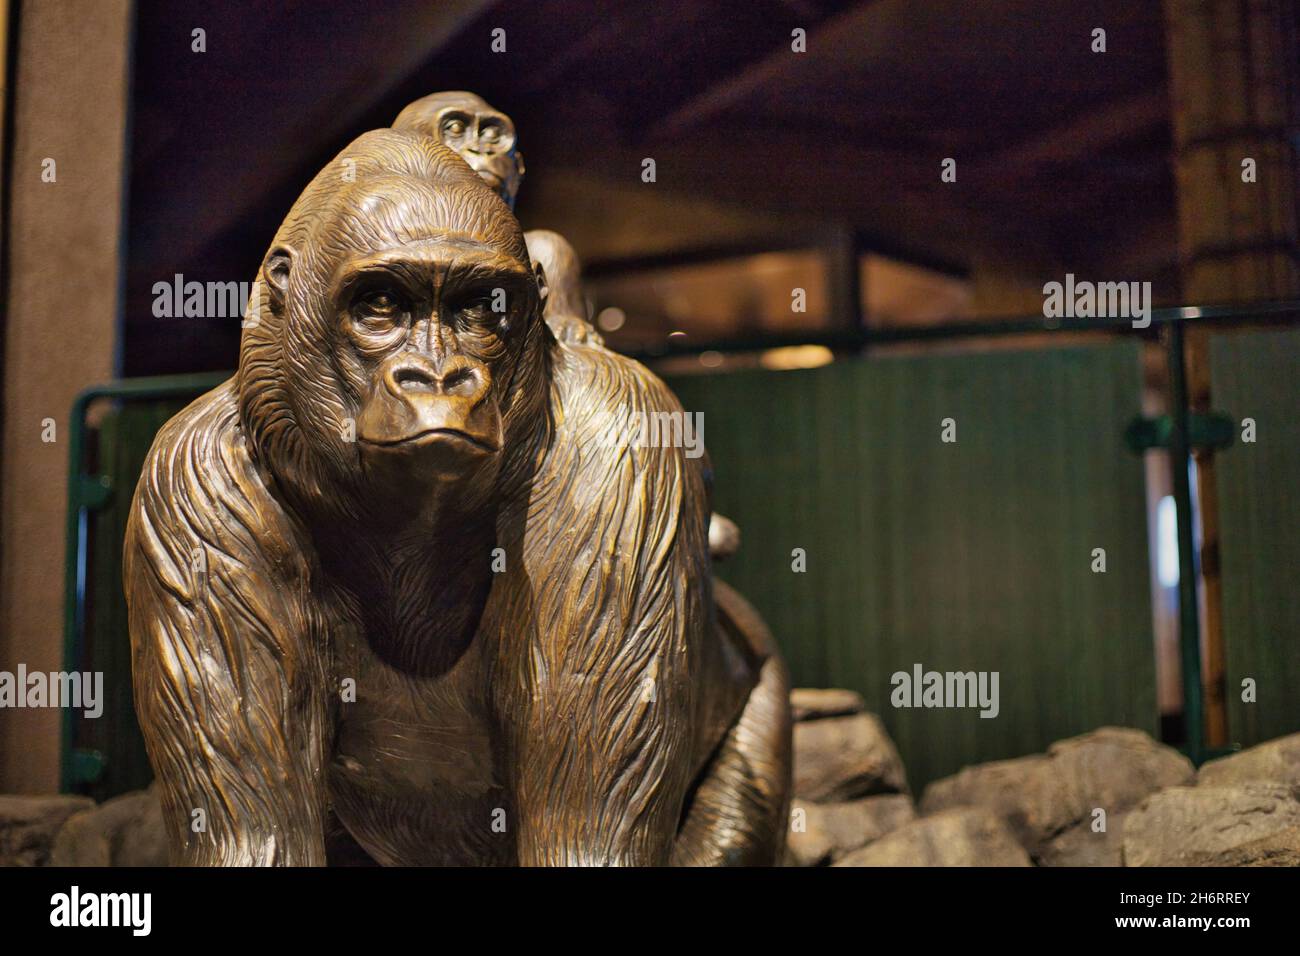 OMAHA, UNITED STATES - Oct 14, 2021: A gorilla sculpture - Omaha's ...